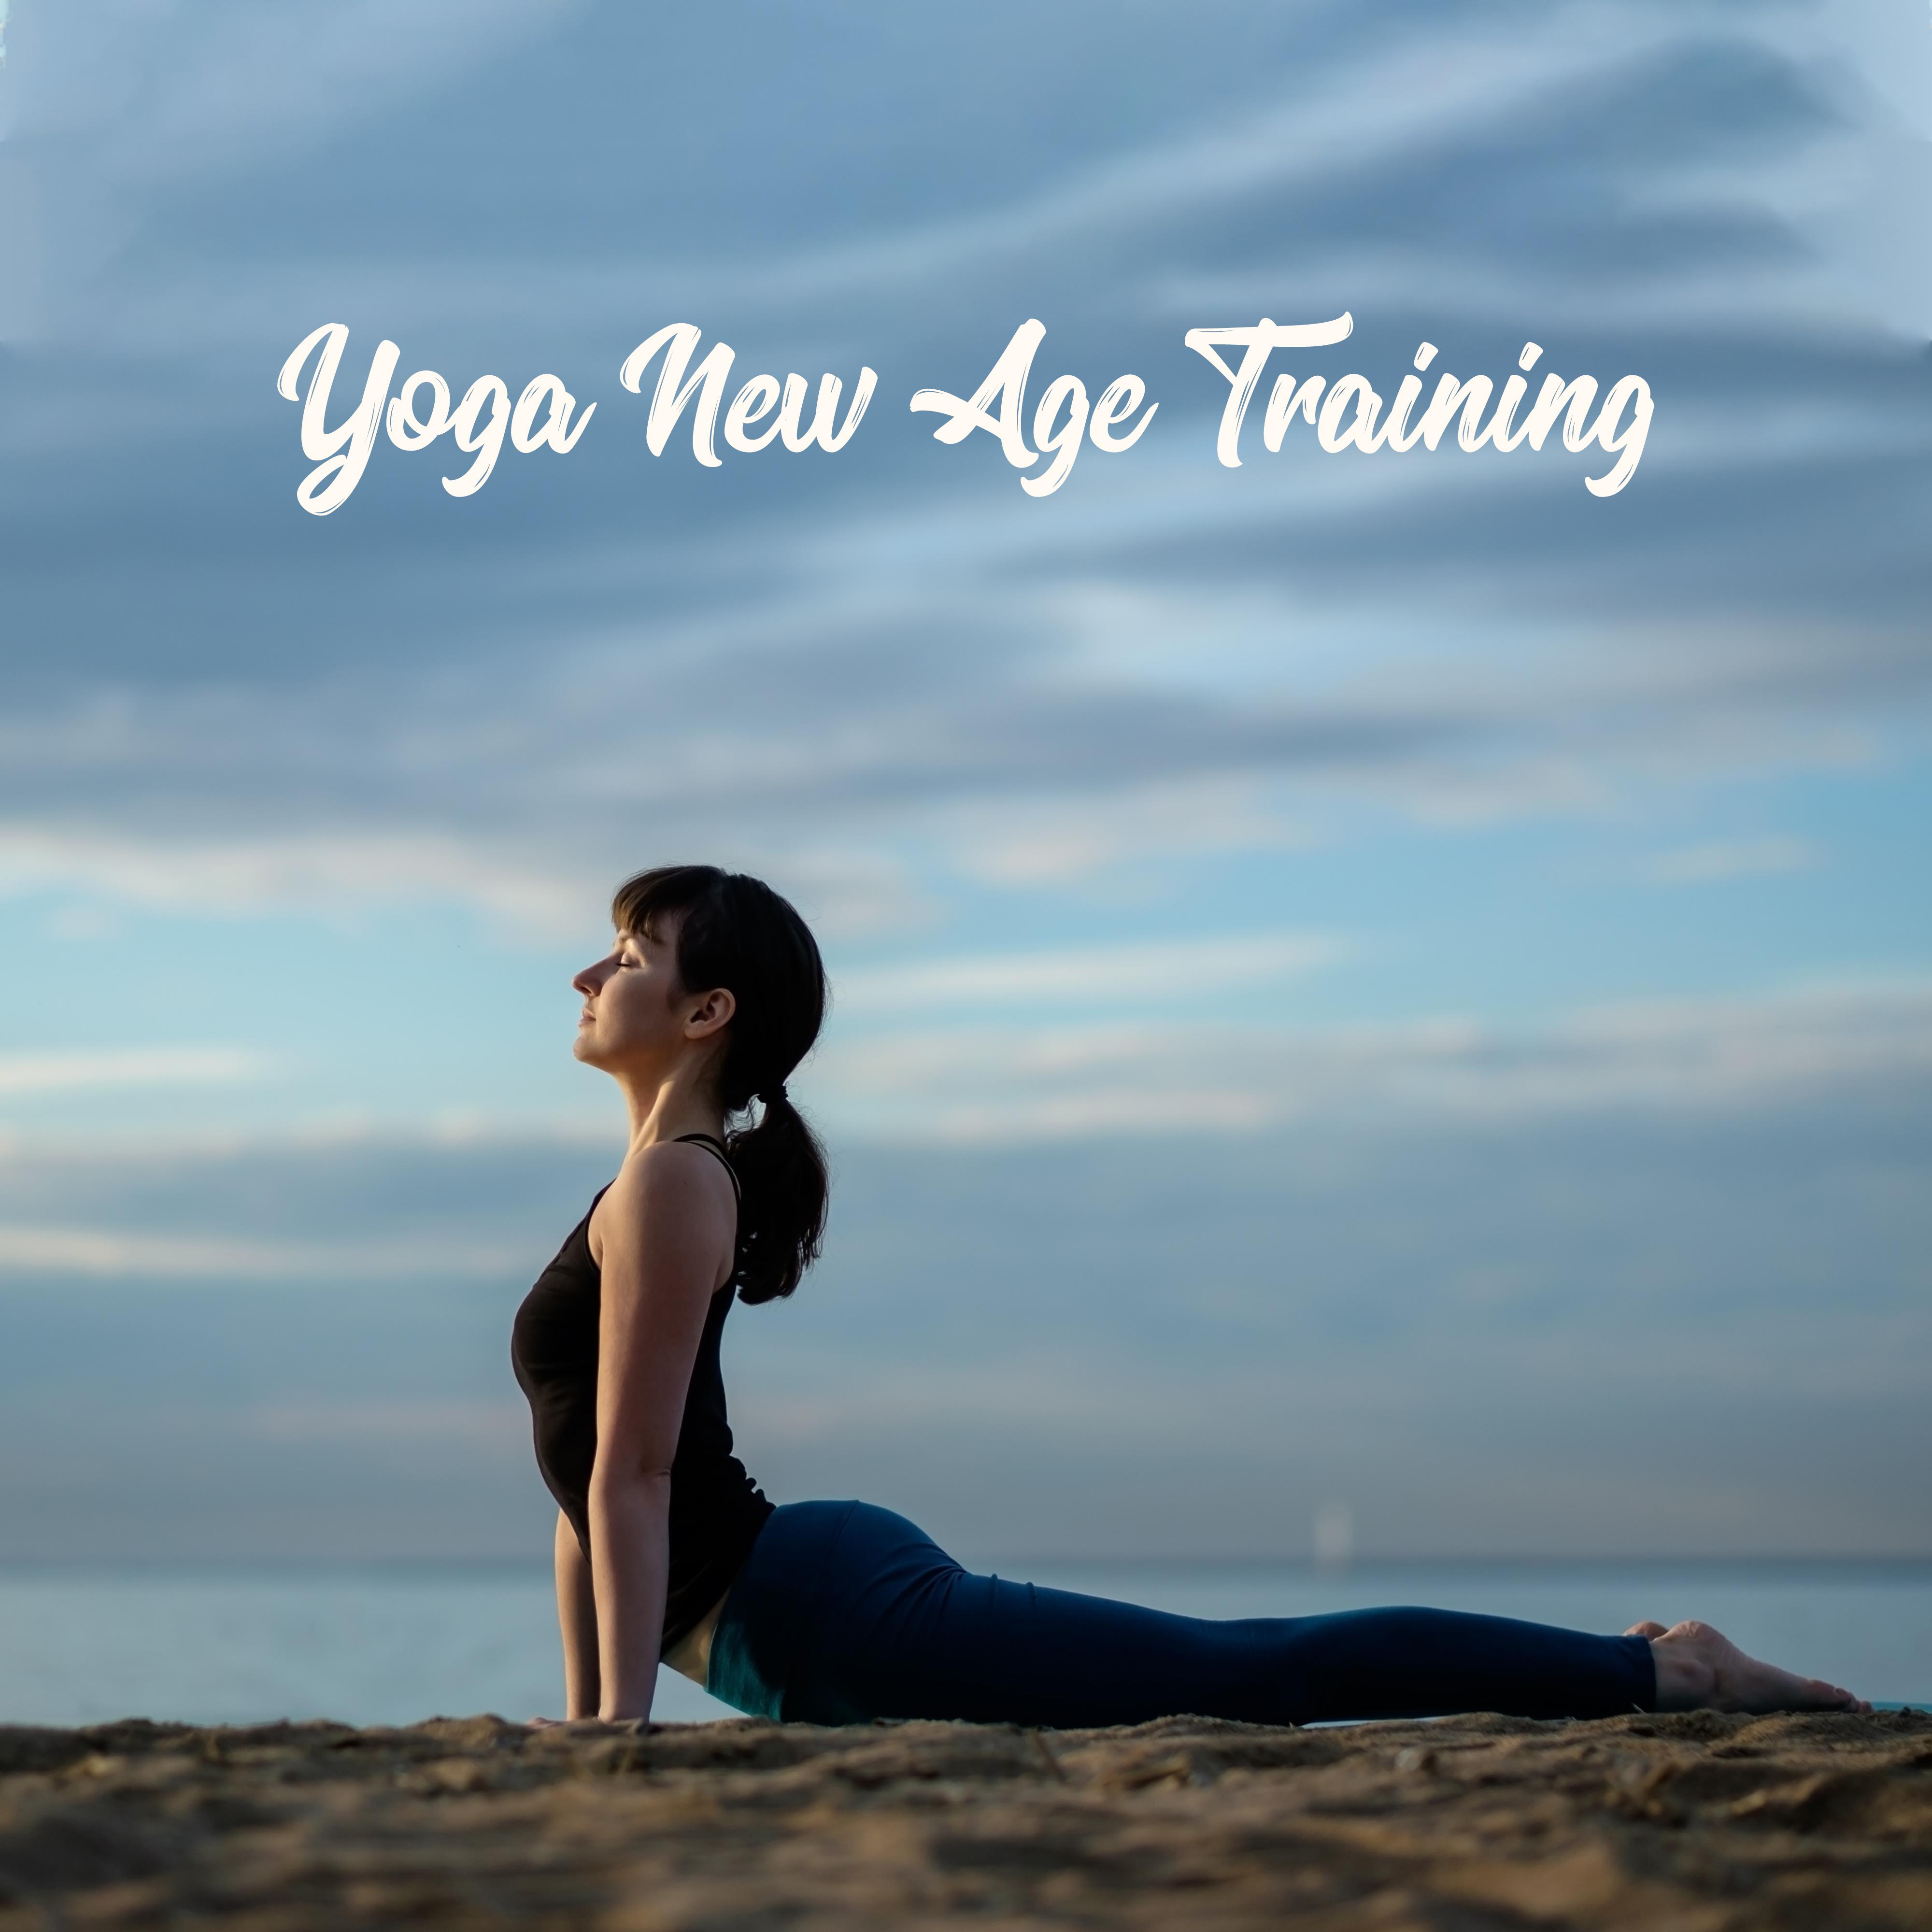 Yoga New Age Training - Spiritual Harmony, Reiki Meditation for Relaxation, Zen Buddhist Therapy, Meditation Music Zone, Yoga Meditation, Asian Meditation Music